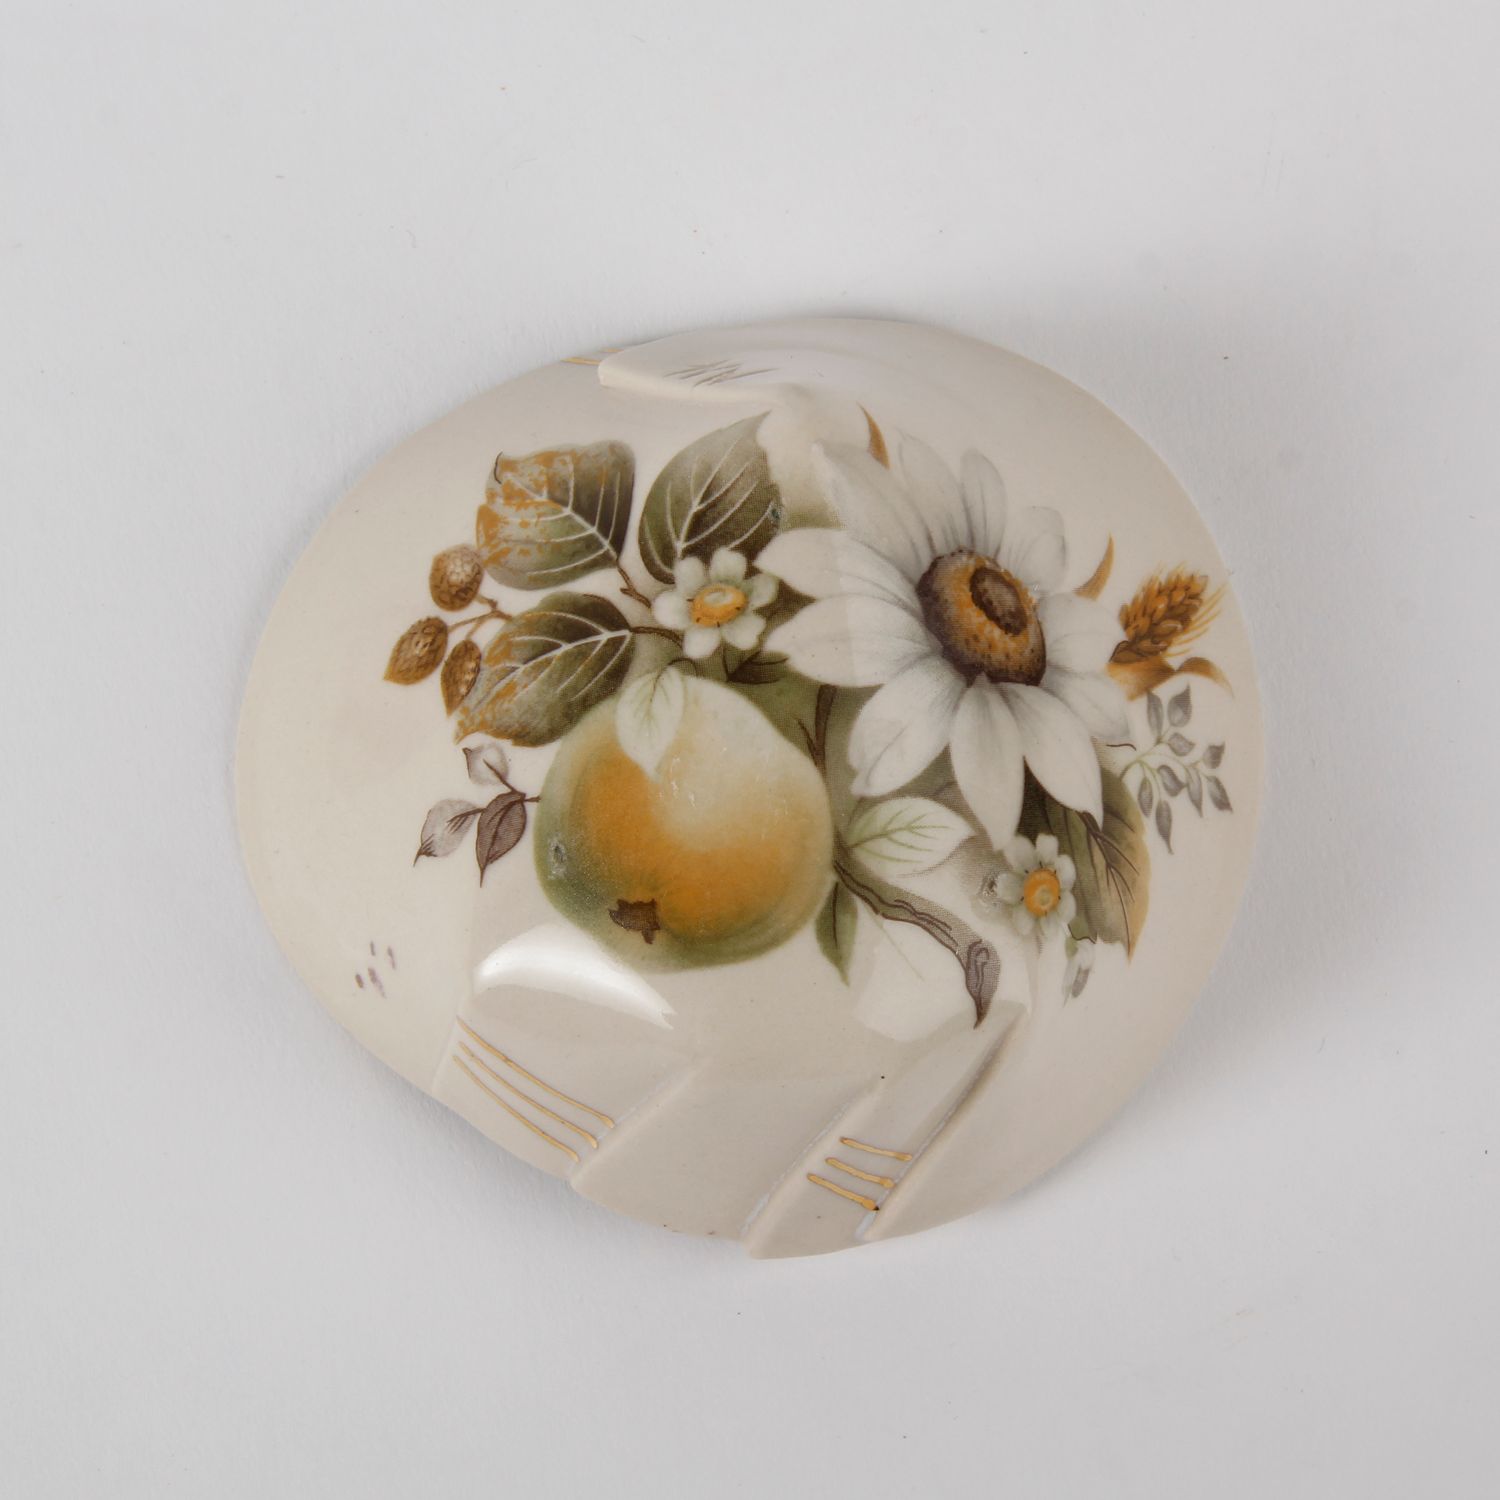 Natalie Waddell: Medium Floral Bowl Product Image 2 of 4